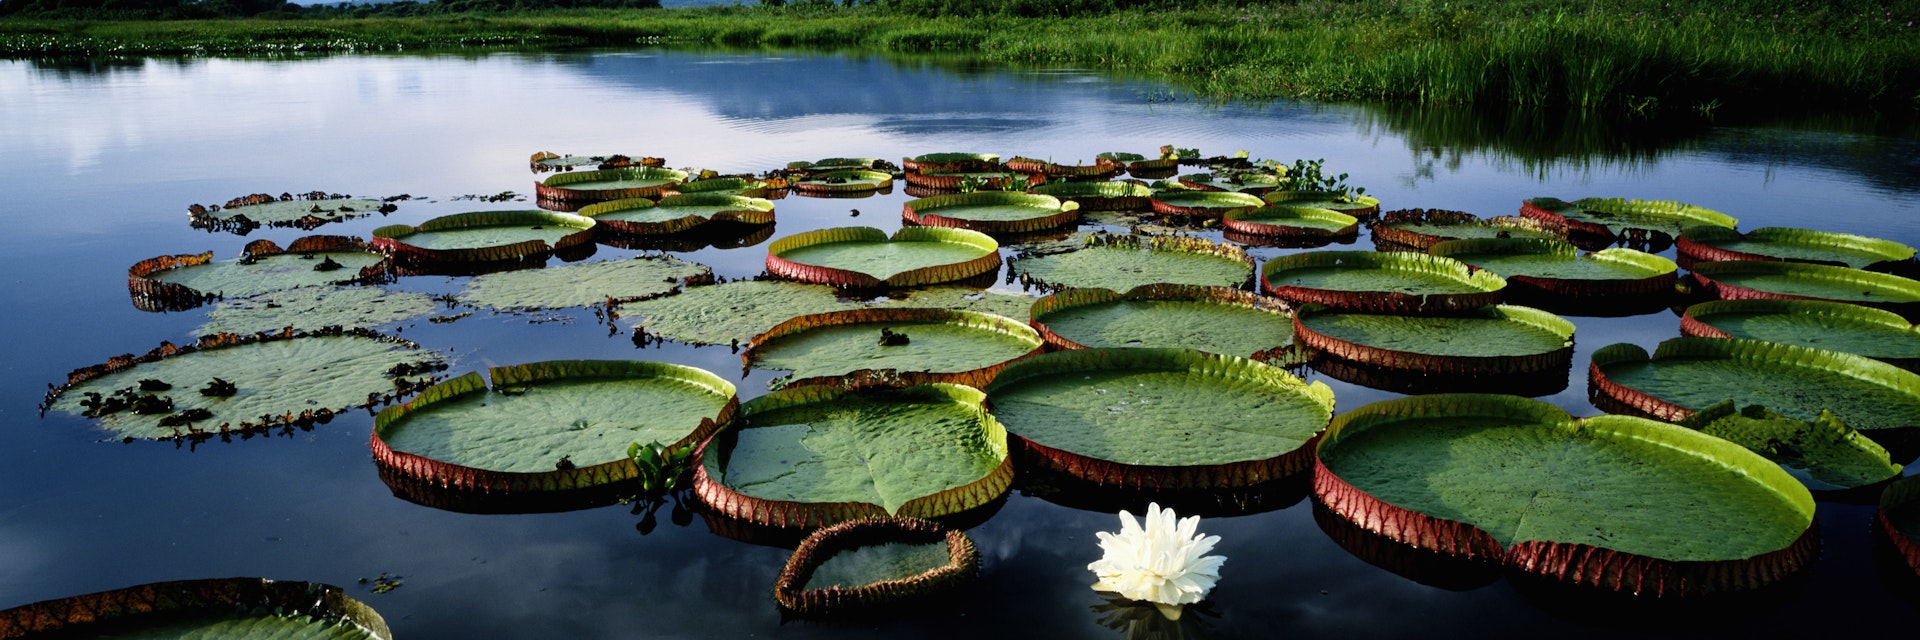 Brazil, Pantanal, water lilies (Victoria regia) sunrise